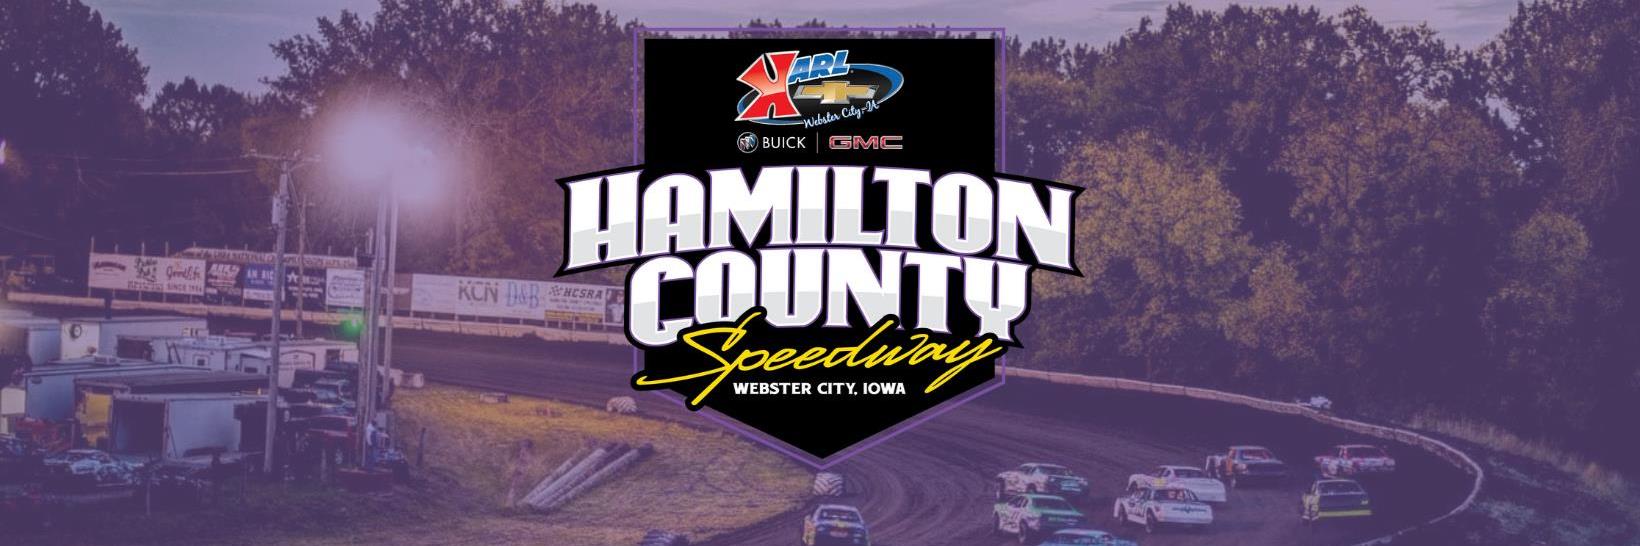 5/21/2022 - Hamilton County Speedway